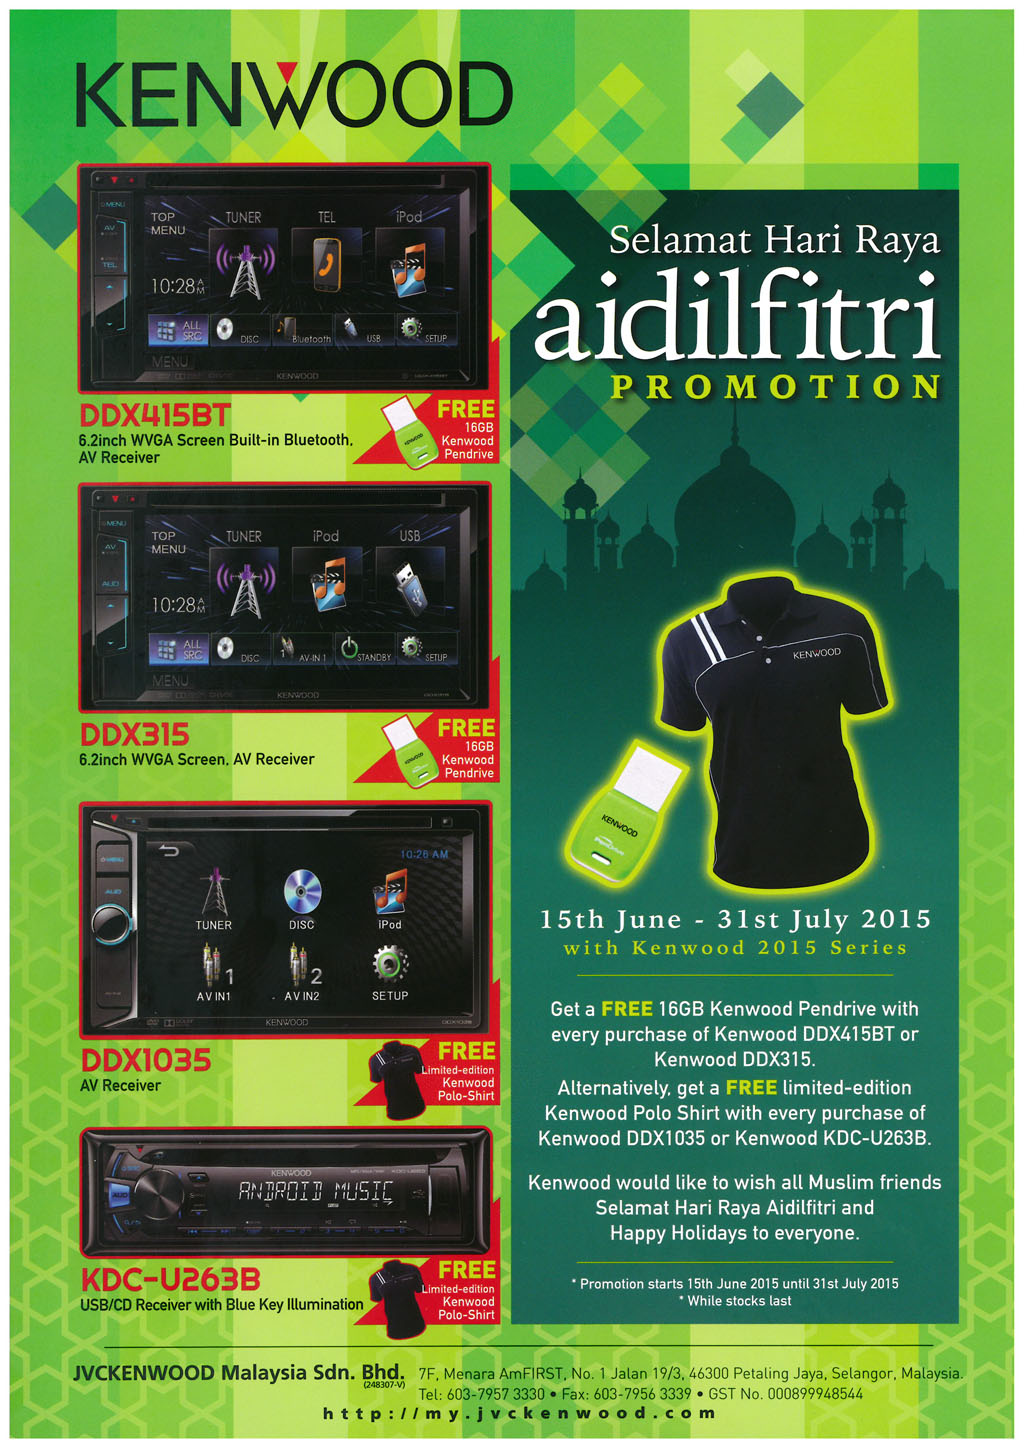 Kenwood Car Audio Hari Raya Promotion with Free gifts